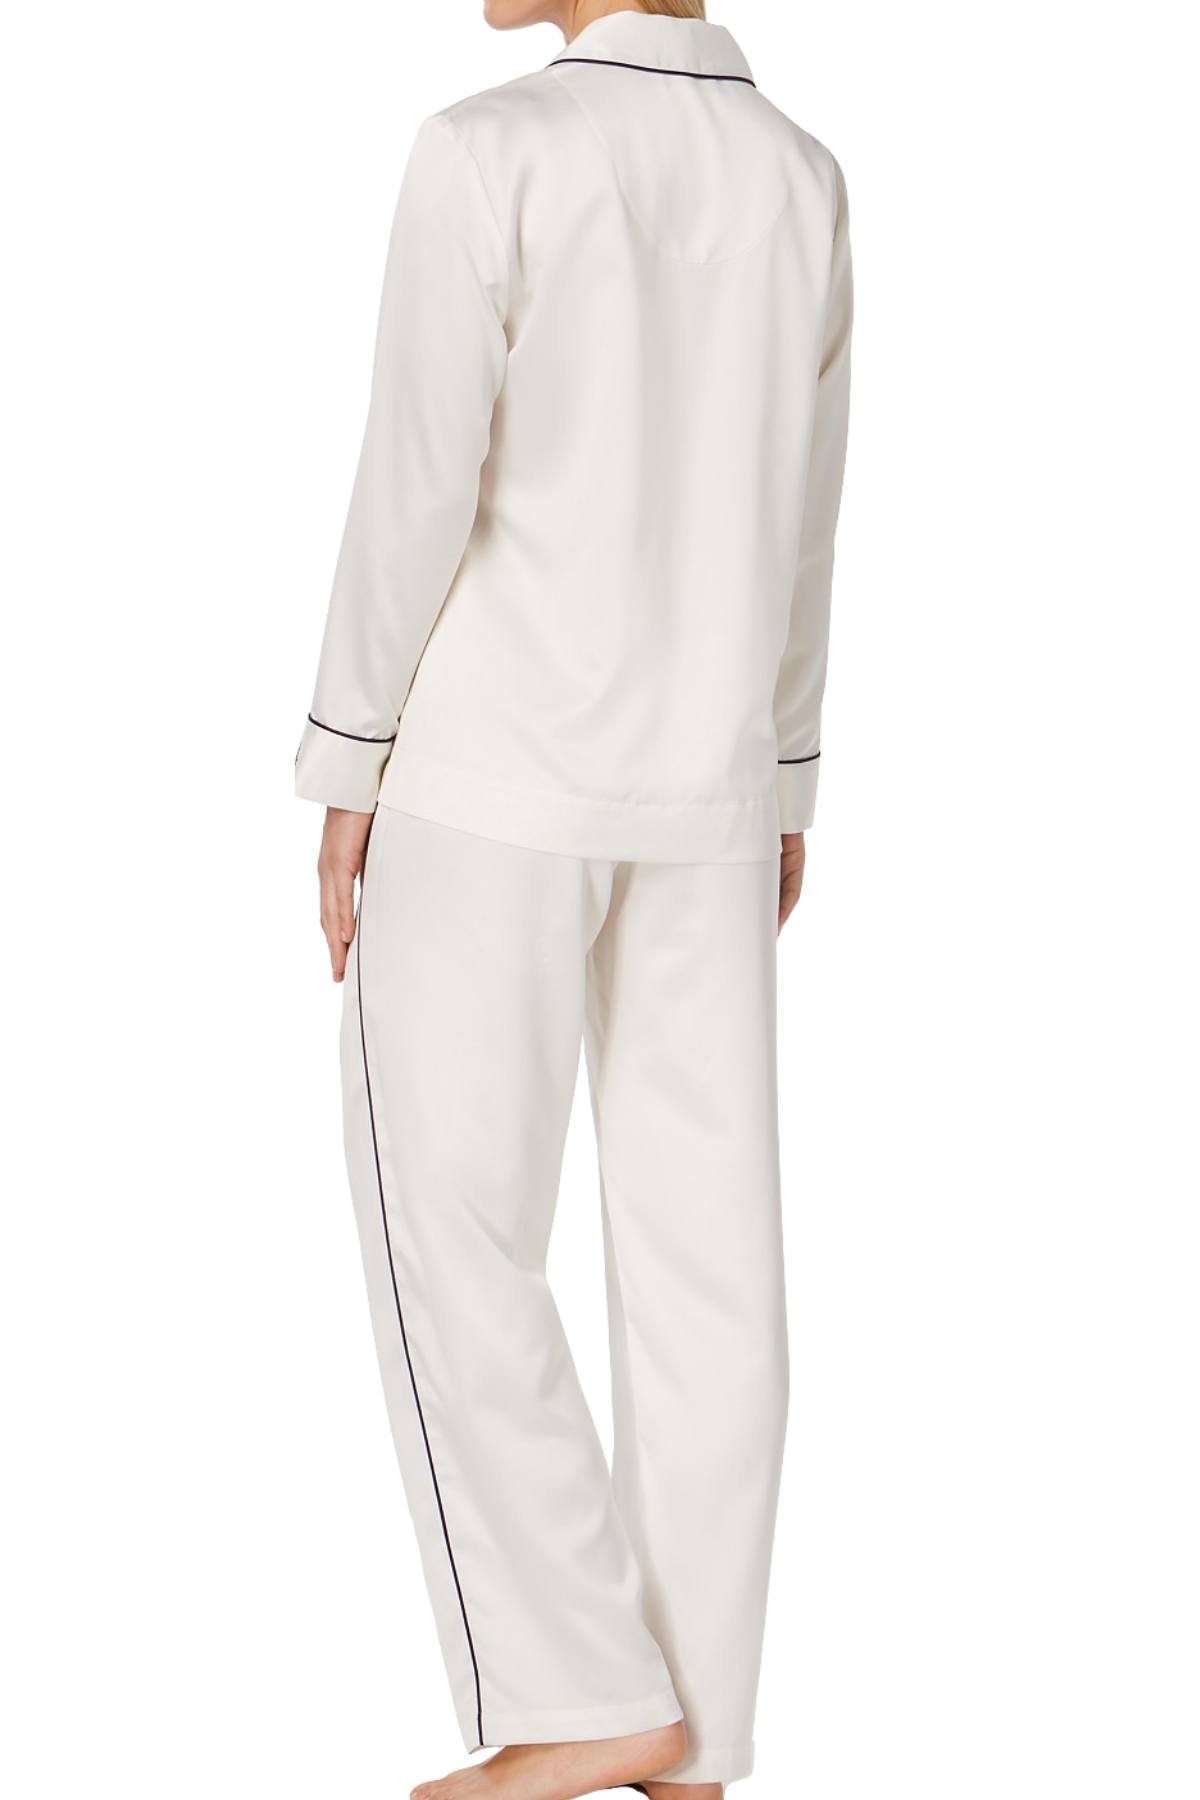 Lauren Ralph Lauren Ivory/Navy French Riviera Contrast-Piping Pajama Set